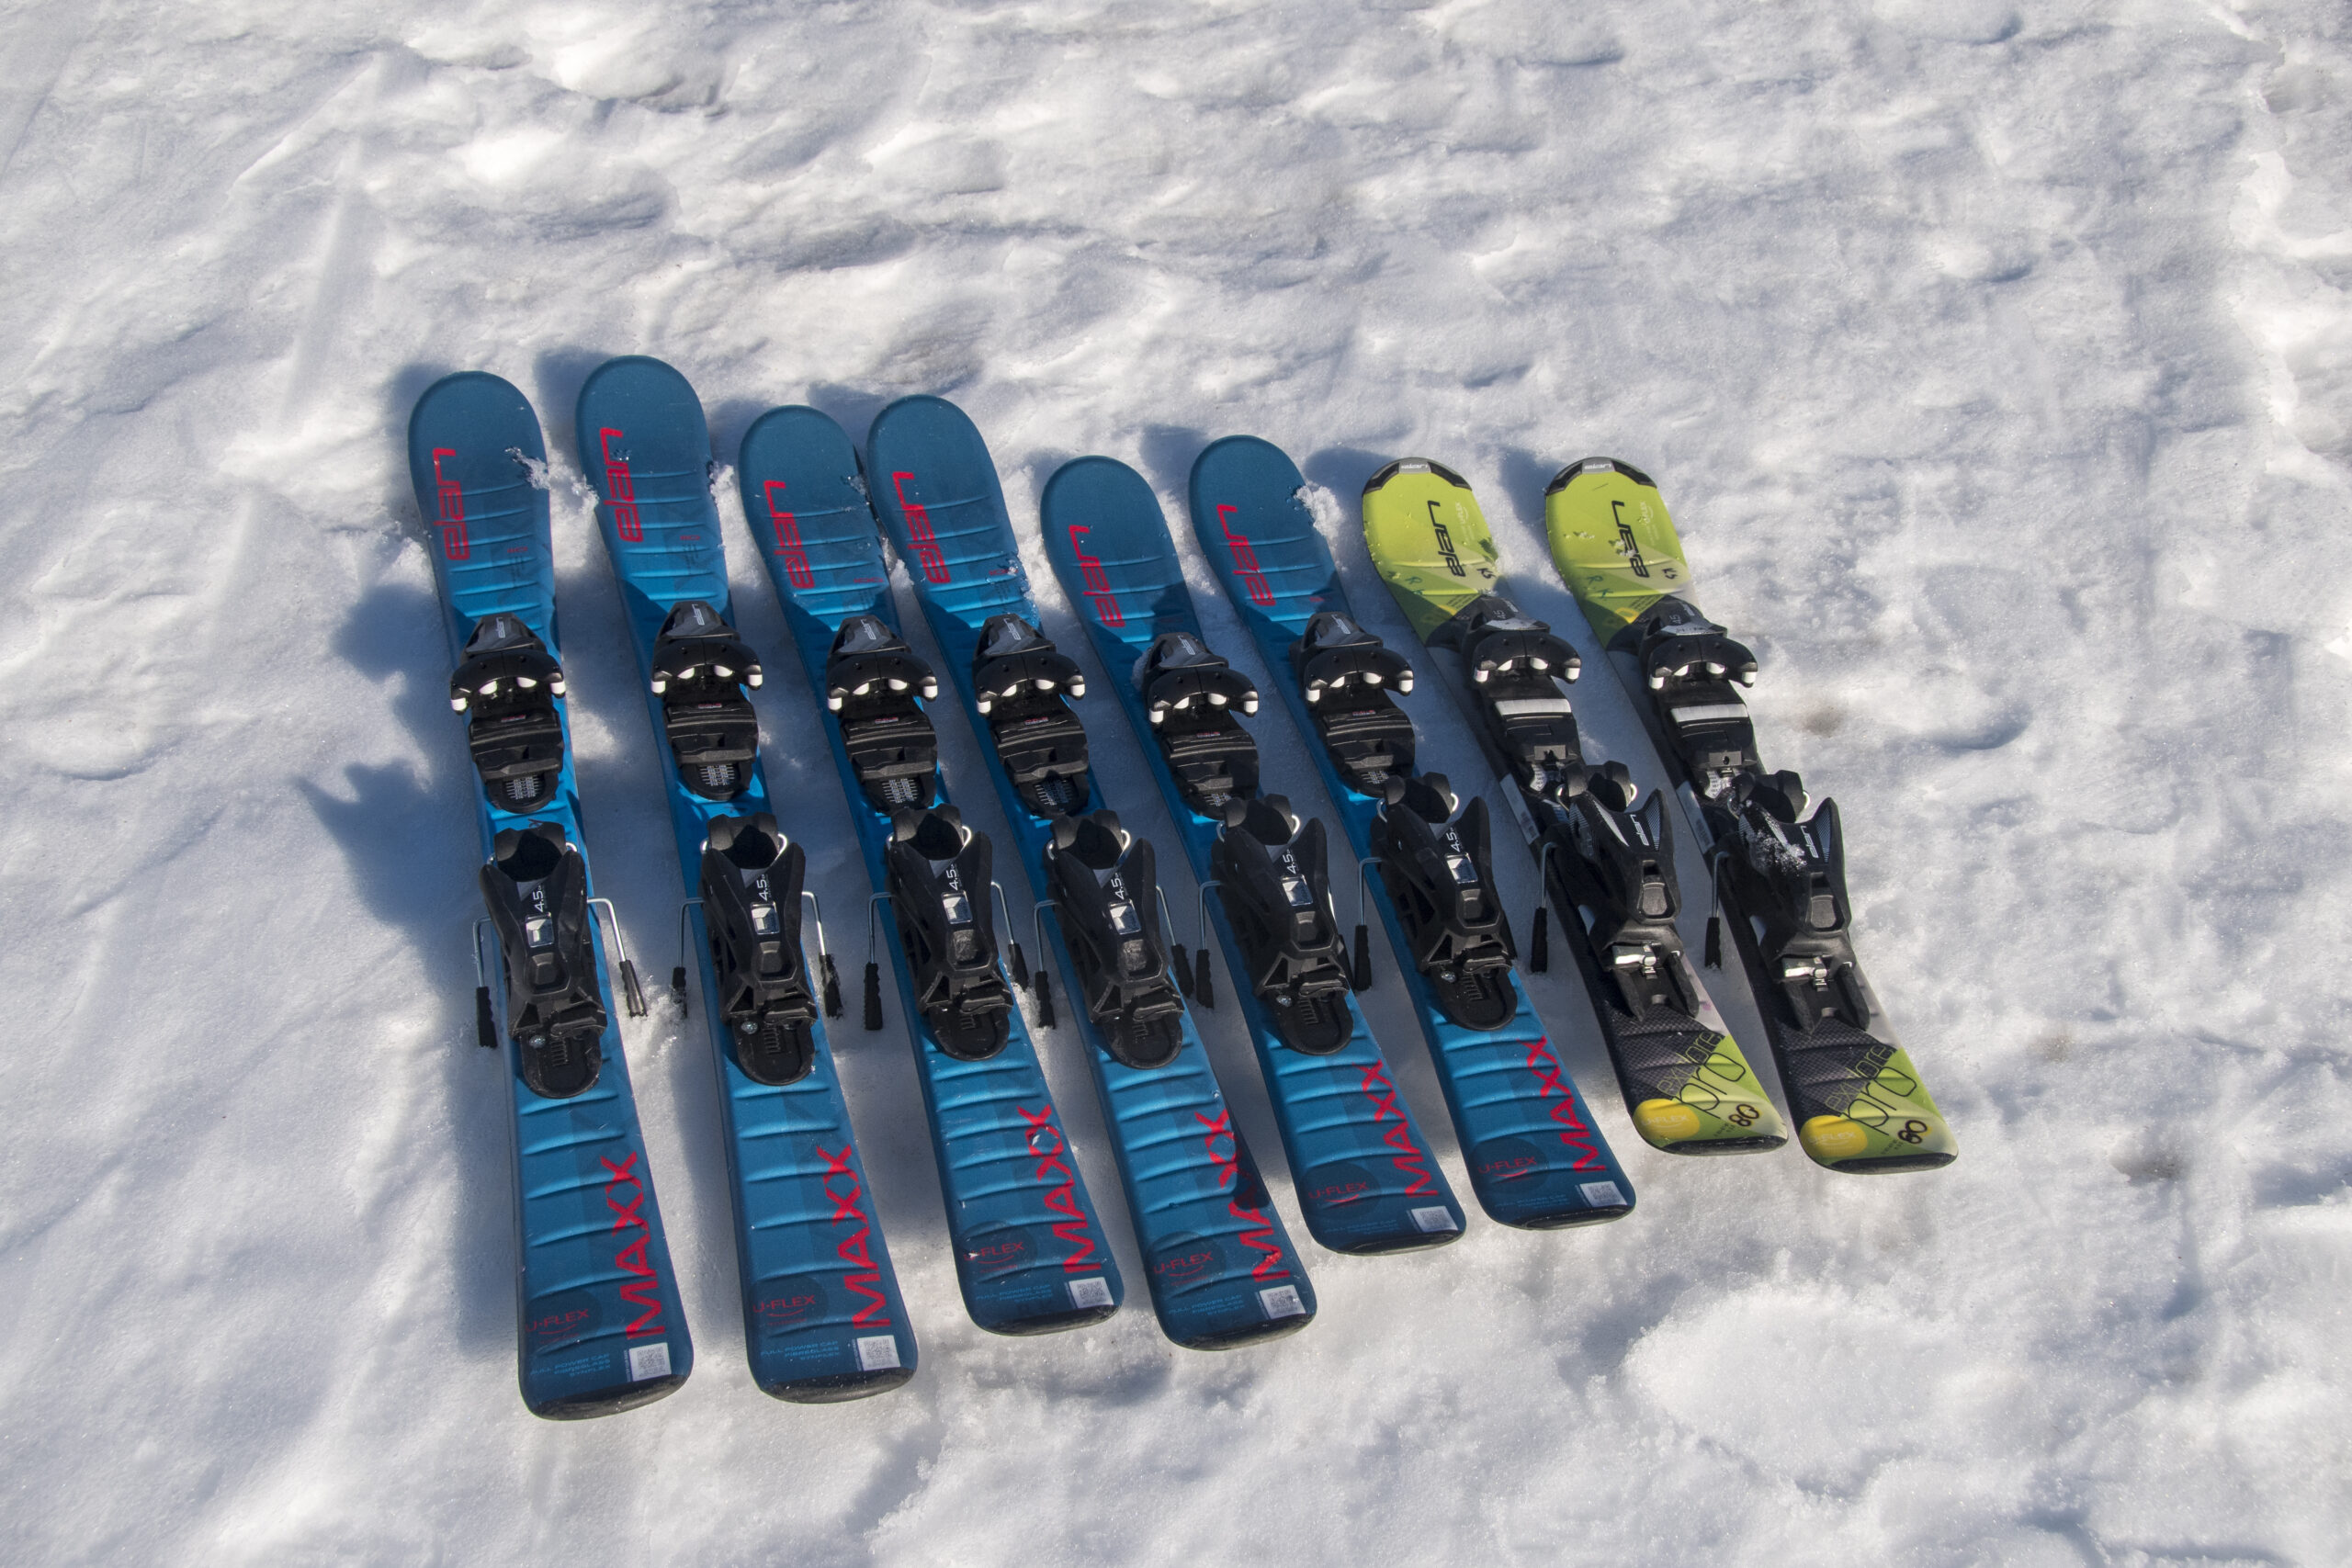 Children's alpine skis for rental.